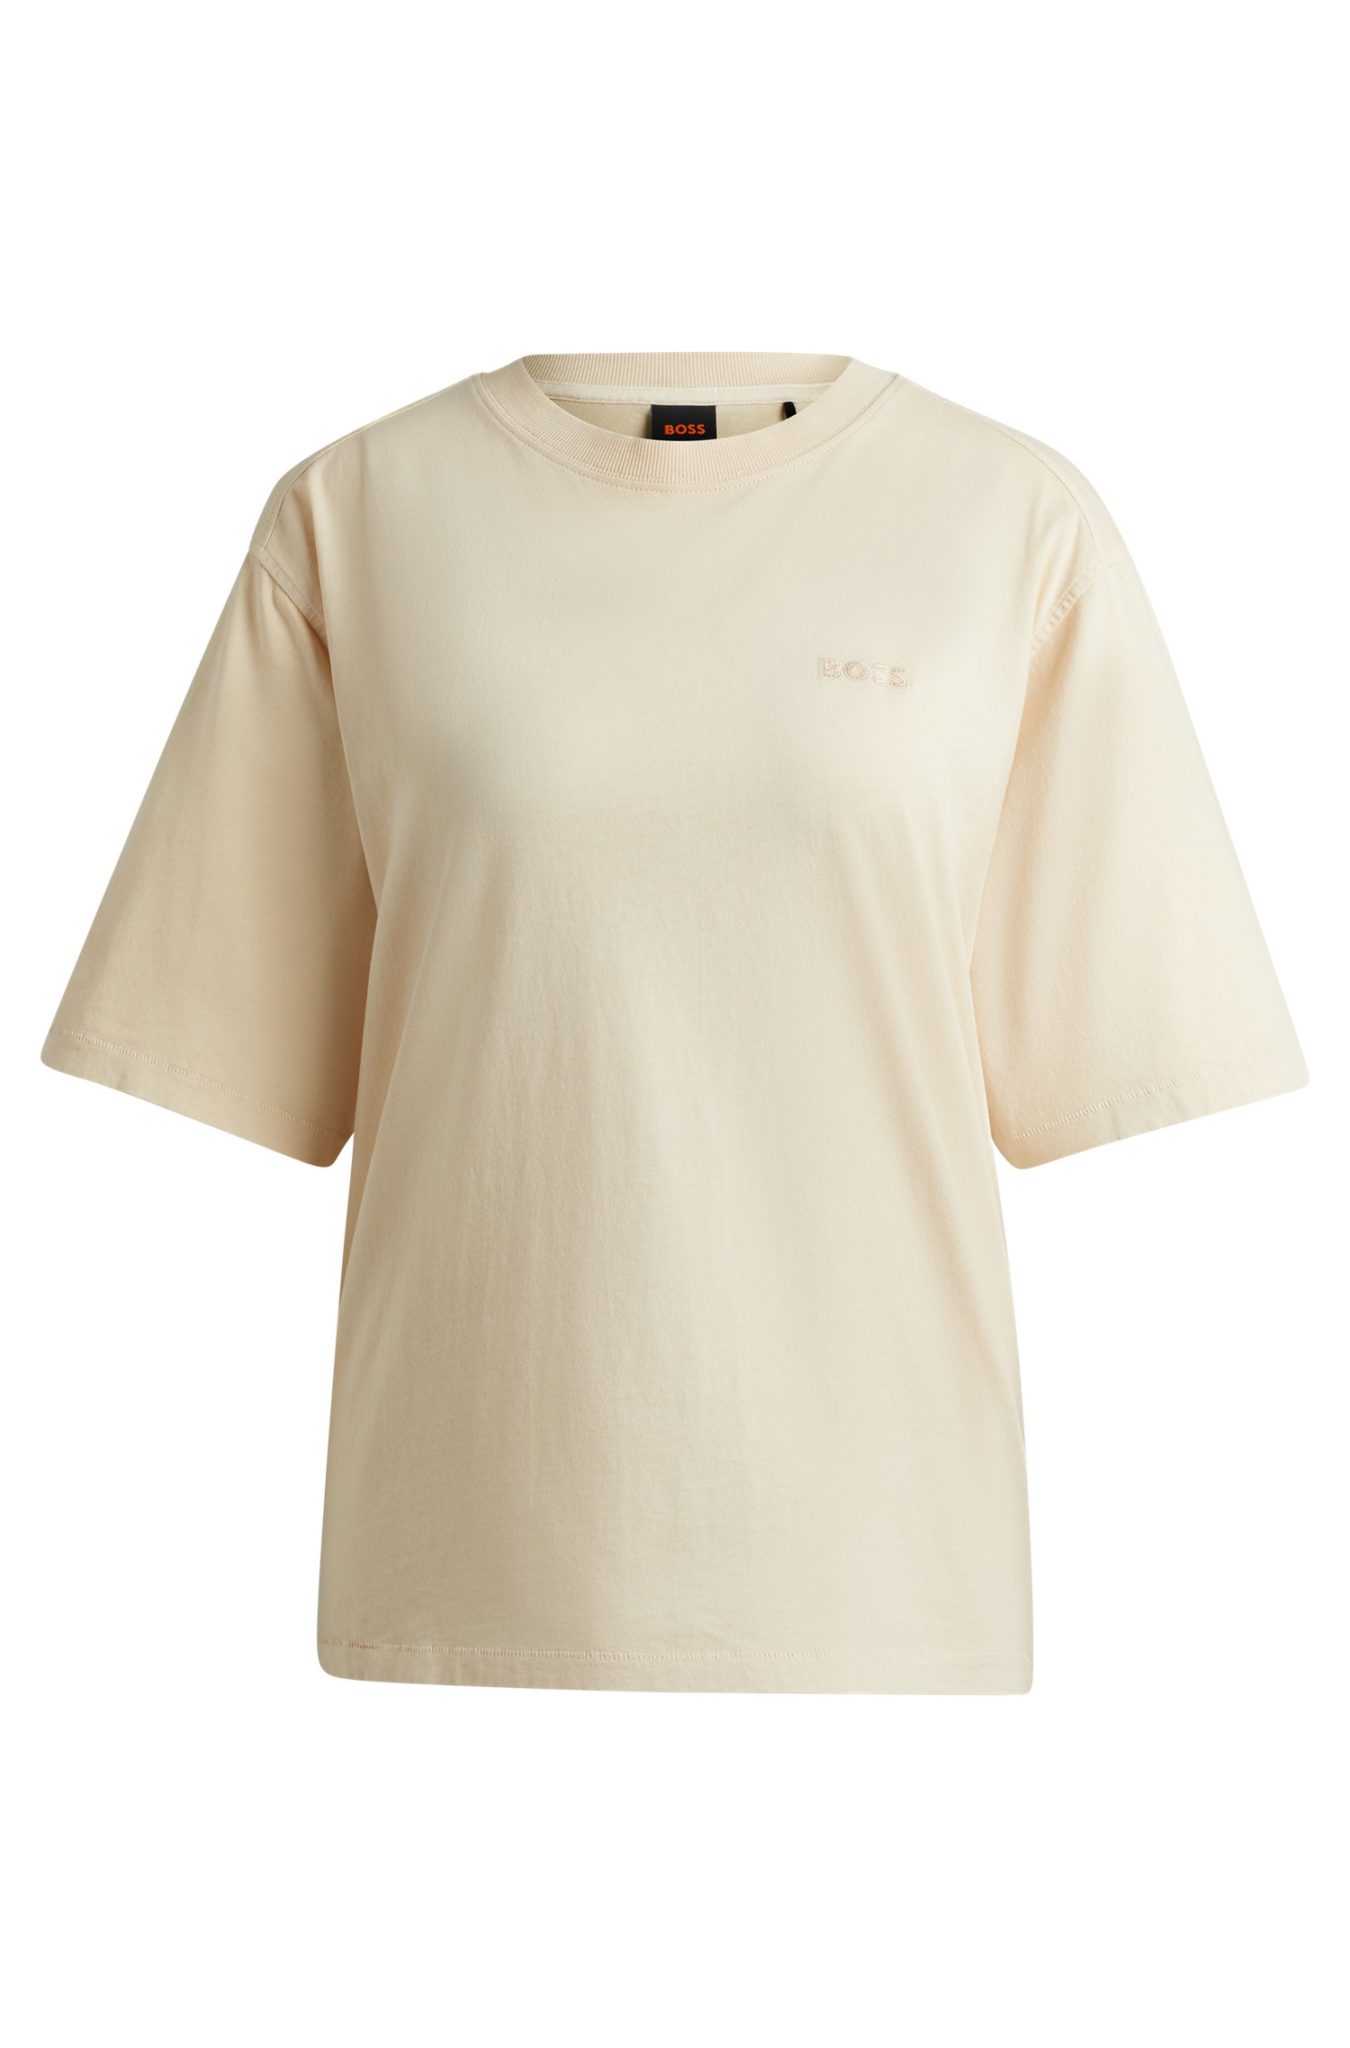 Hugo Boss T-shirt en coton à logo brodé